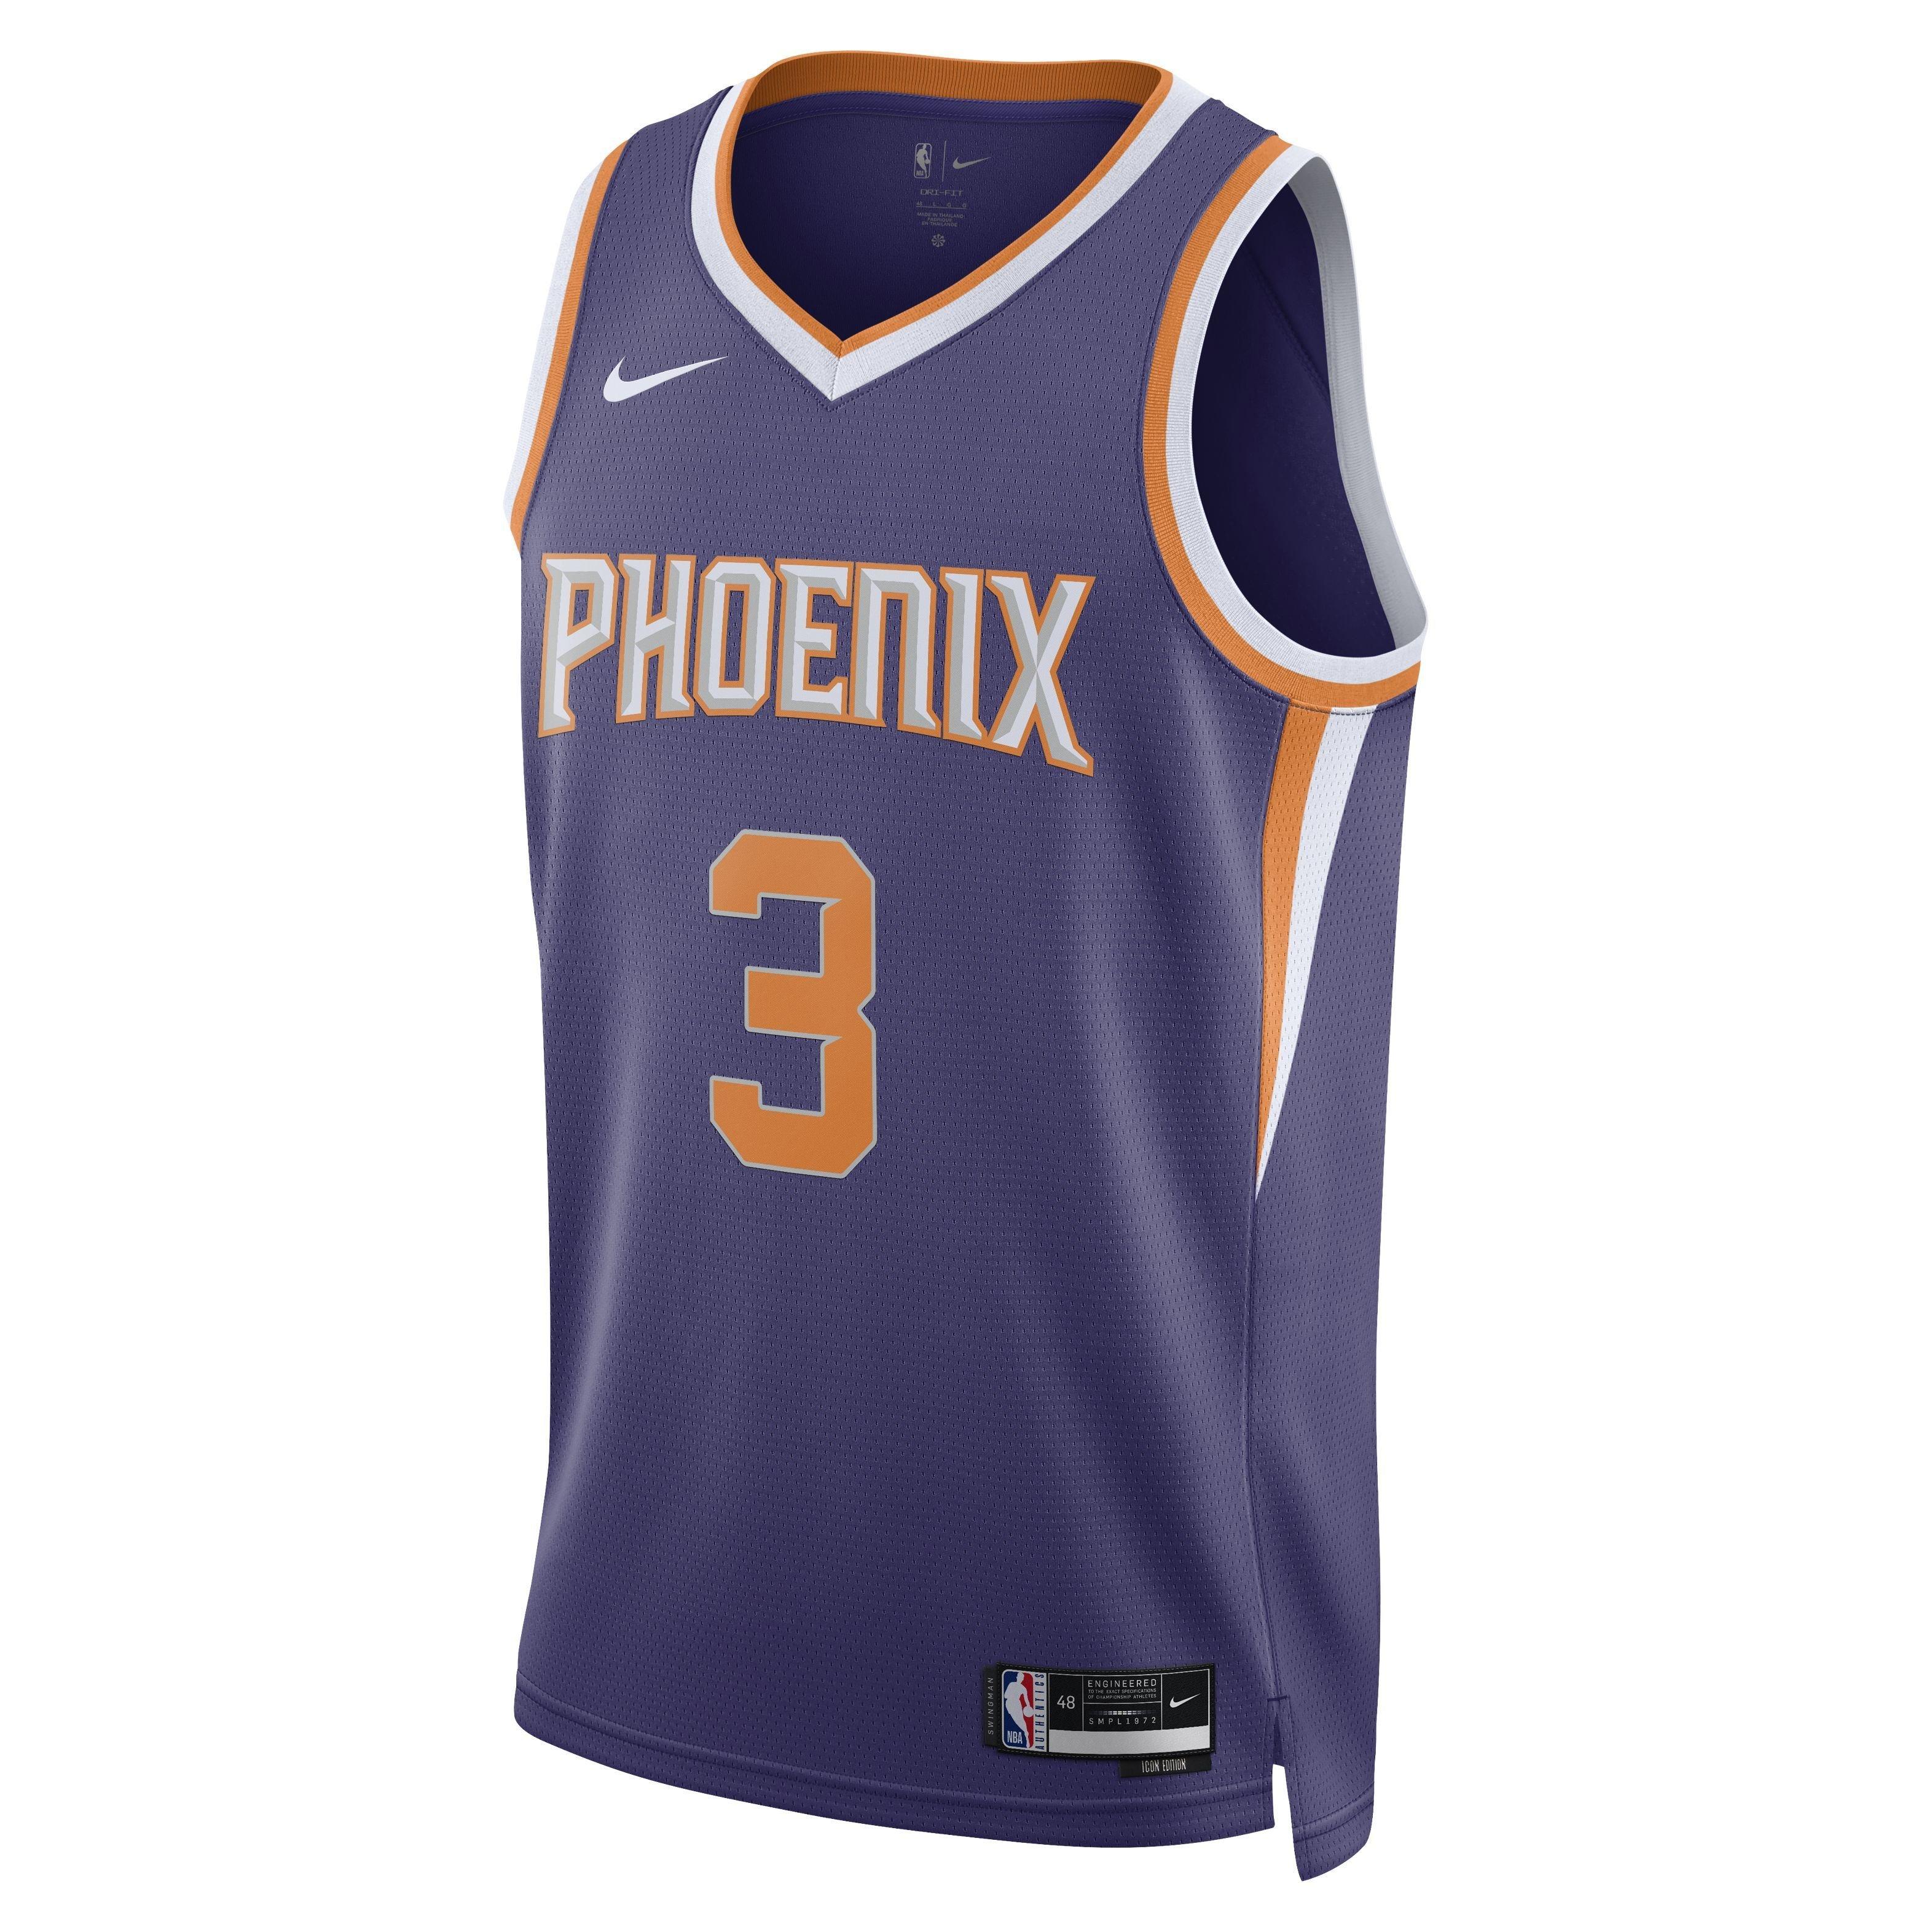  adidas Phoenix Suns NBA White Authentic On-Court Home